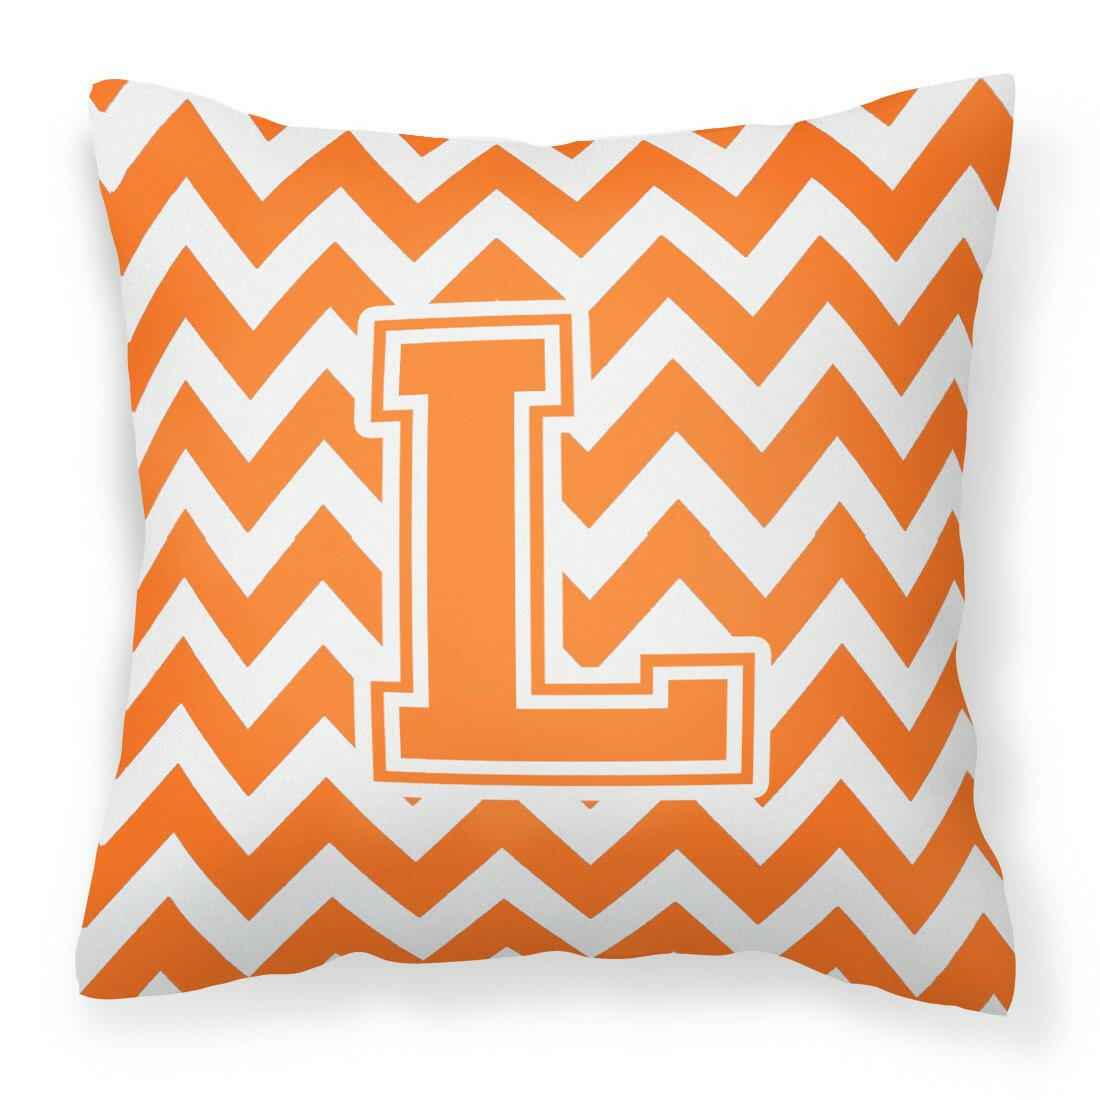 Letter L Chevron Orange and White Fabric Decorative Pillow CJ1046-LPW1414 by Caroline's Treasures